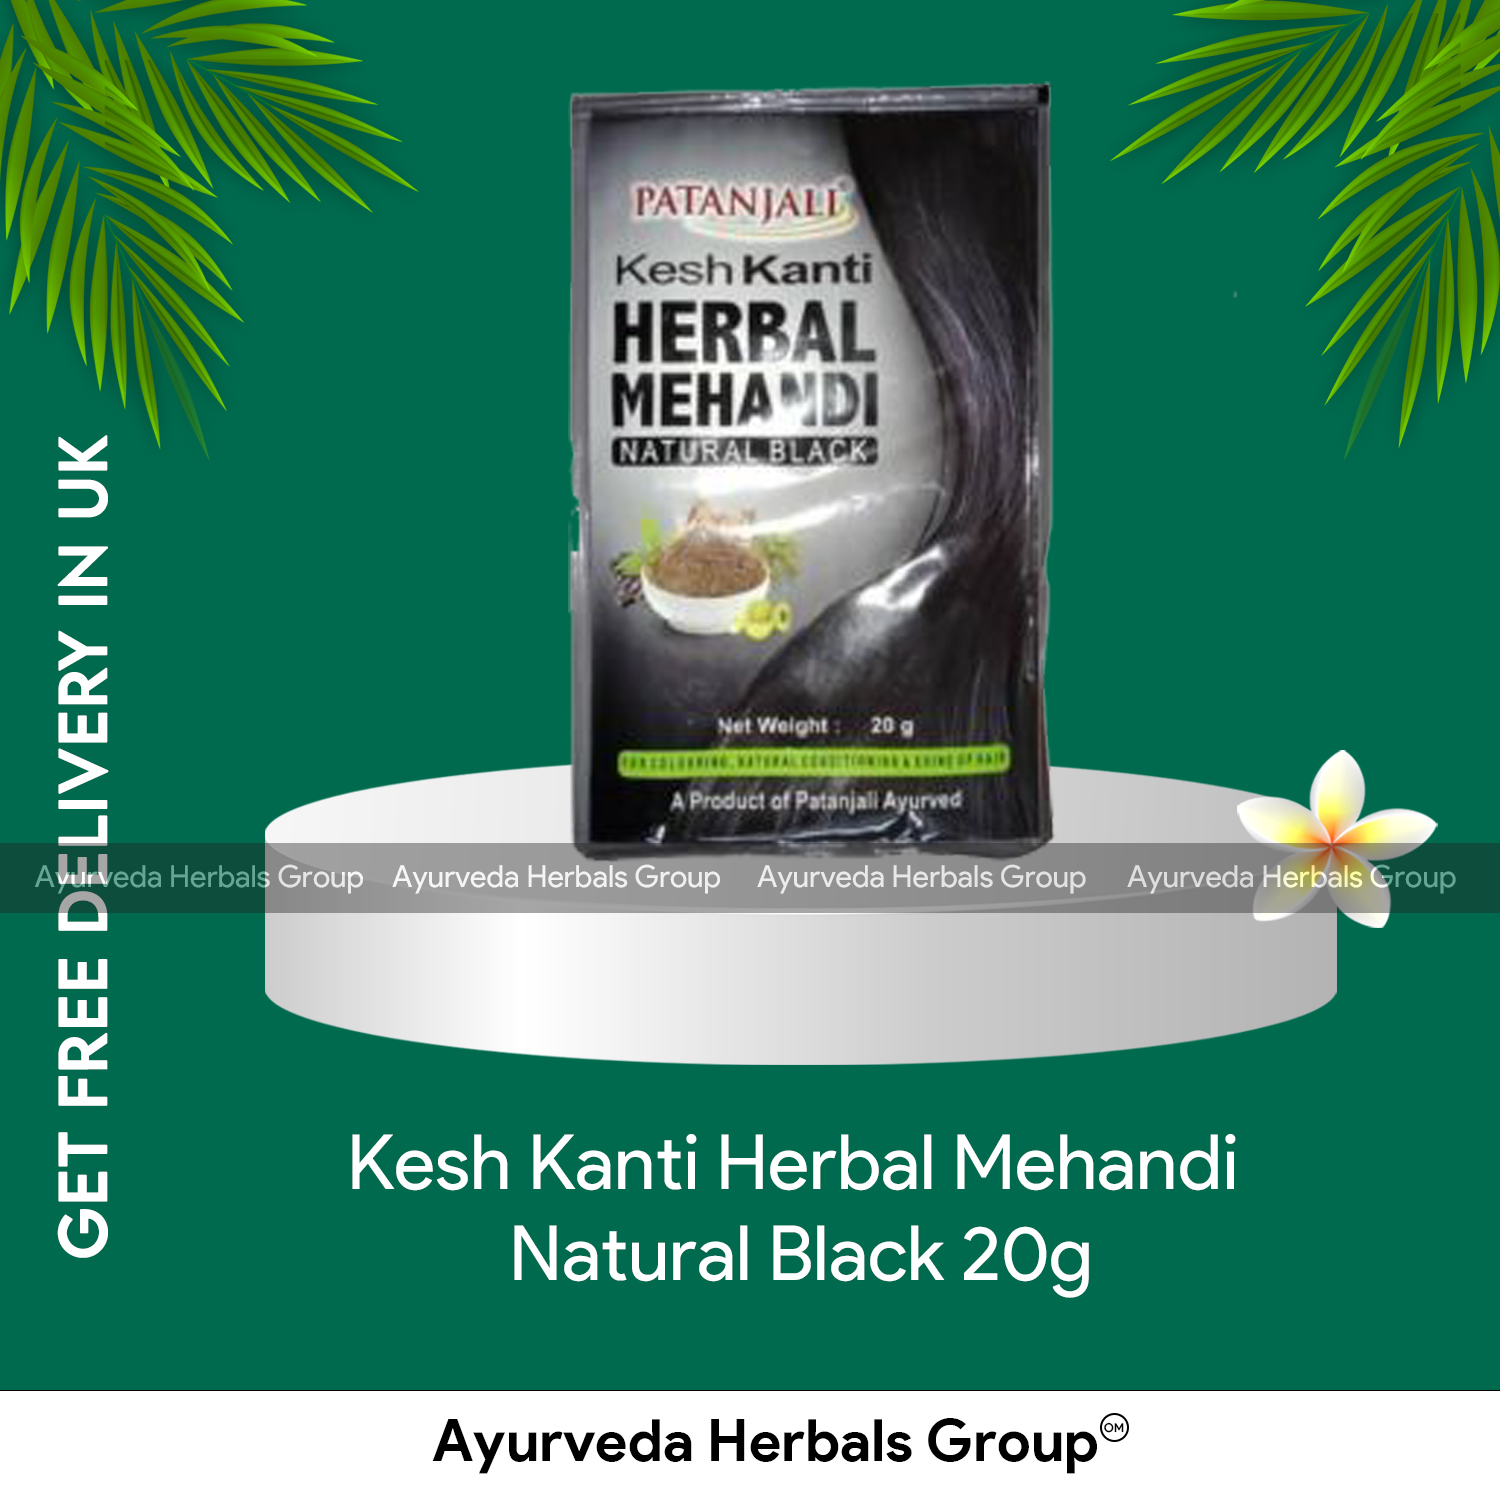 Kesh Kanti Herbal Mehandi Natural Black 20g